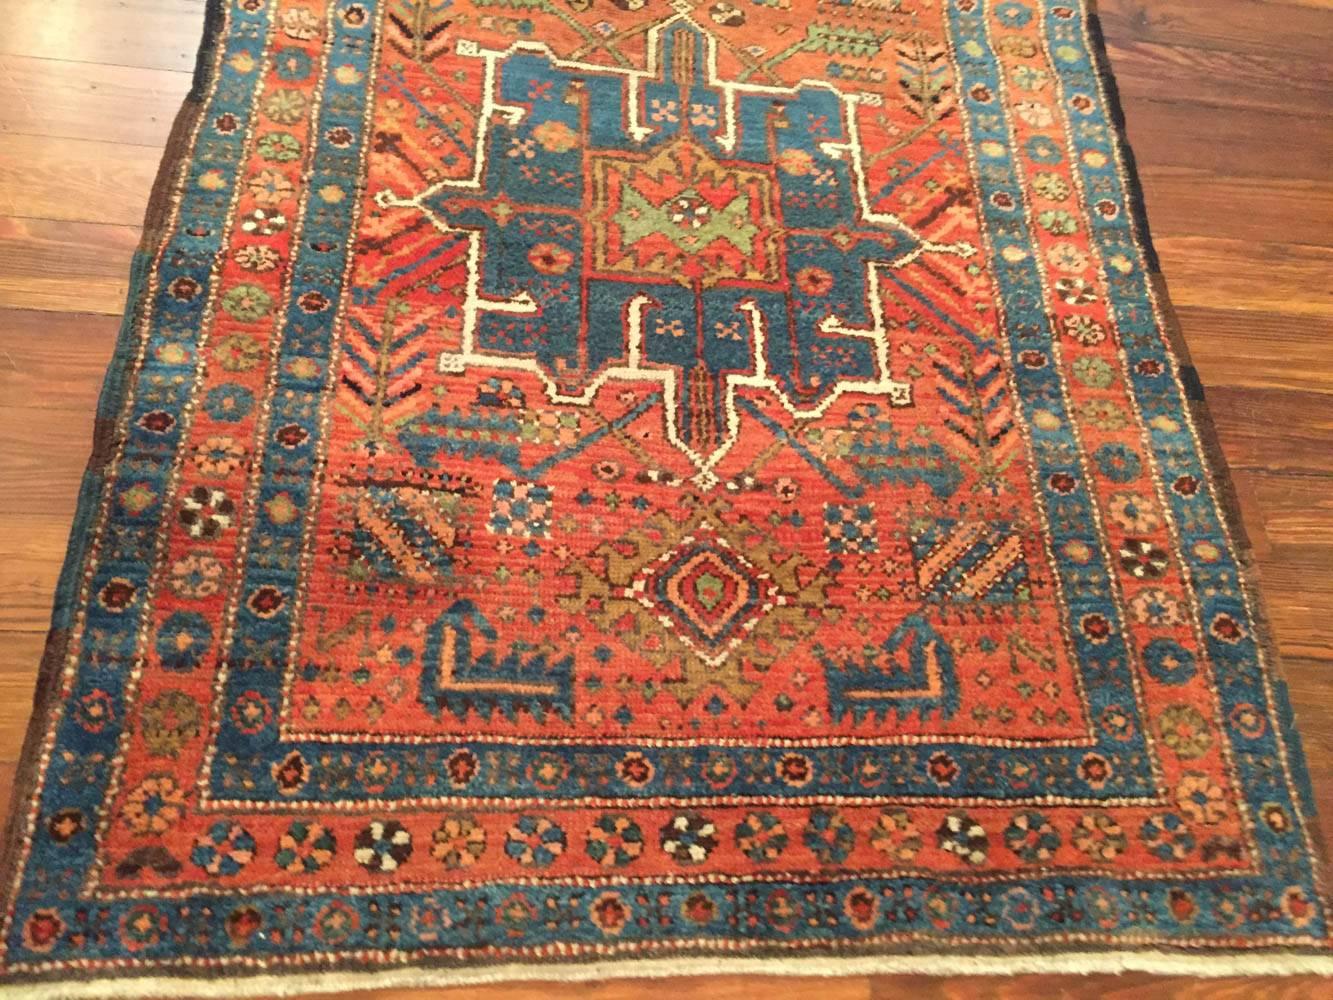 An antique Persian Heriz runner rug, circa 1910.